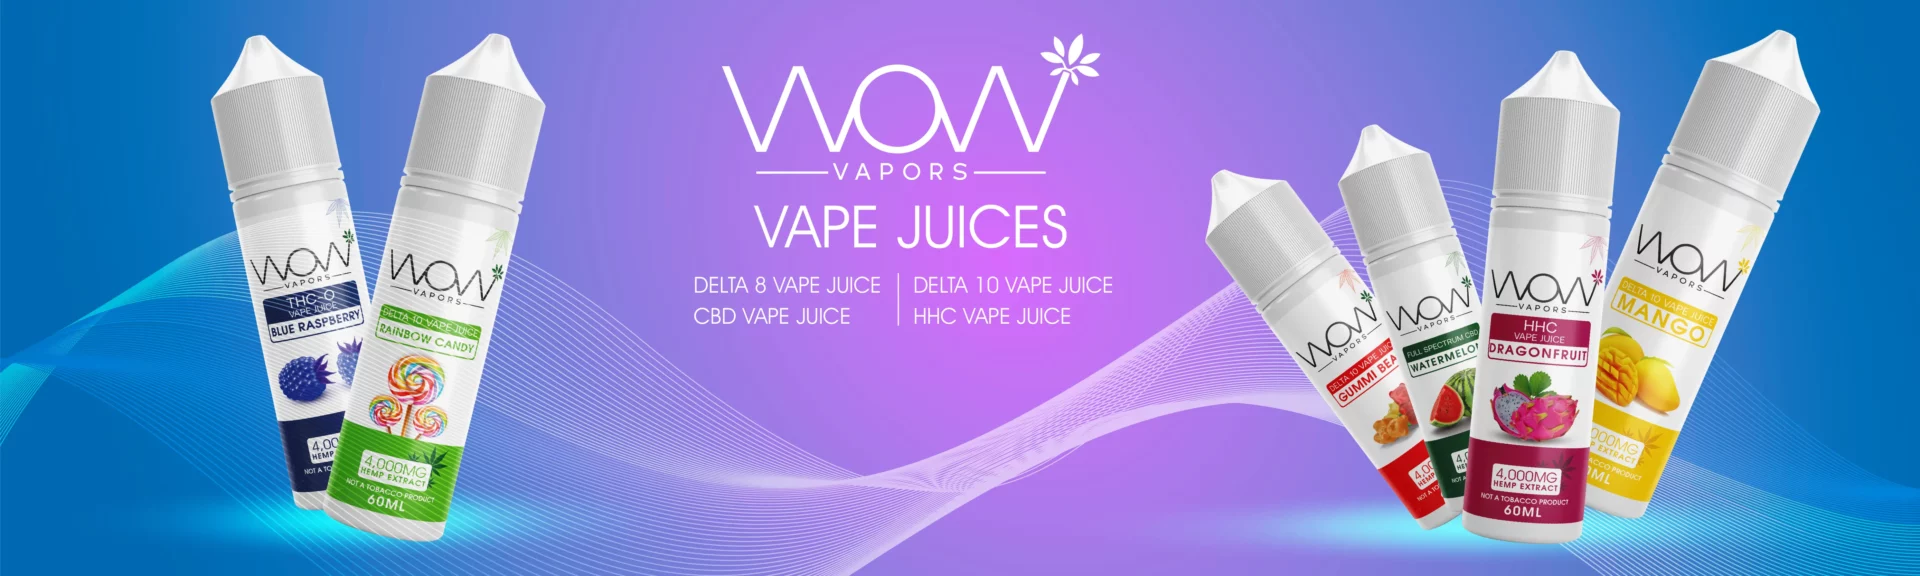 WOW Vapors Delta 8 Vape Juice Banner 2-02